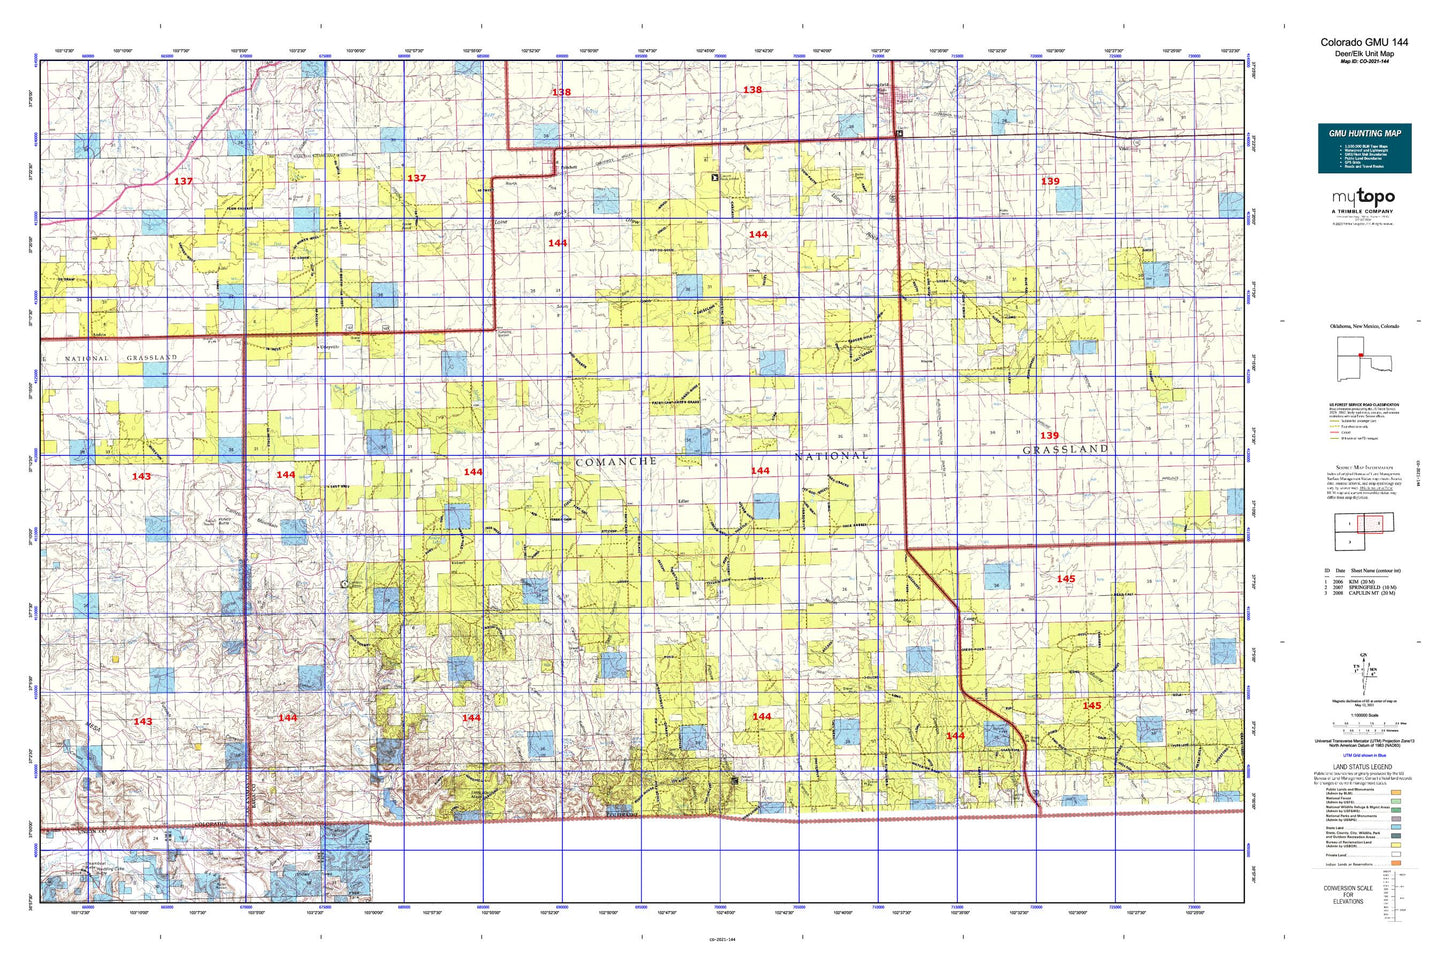 Colorado GMU 144 Map Image